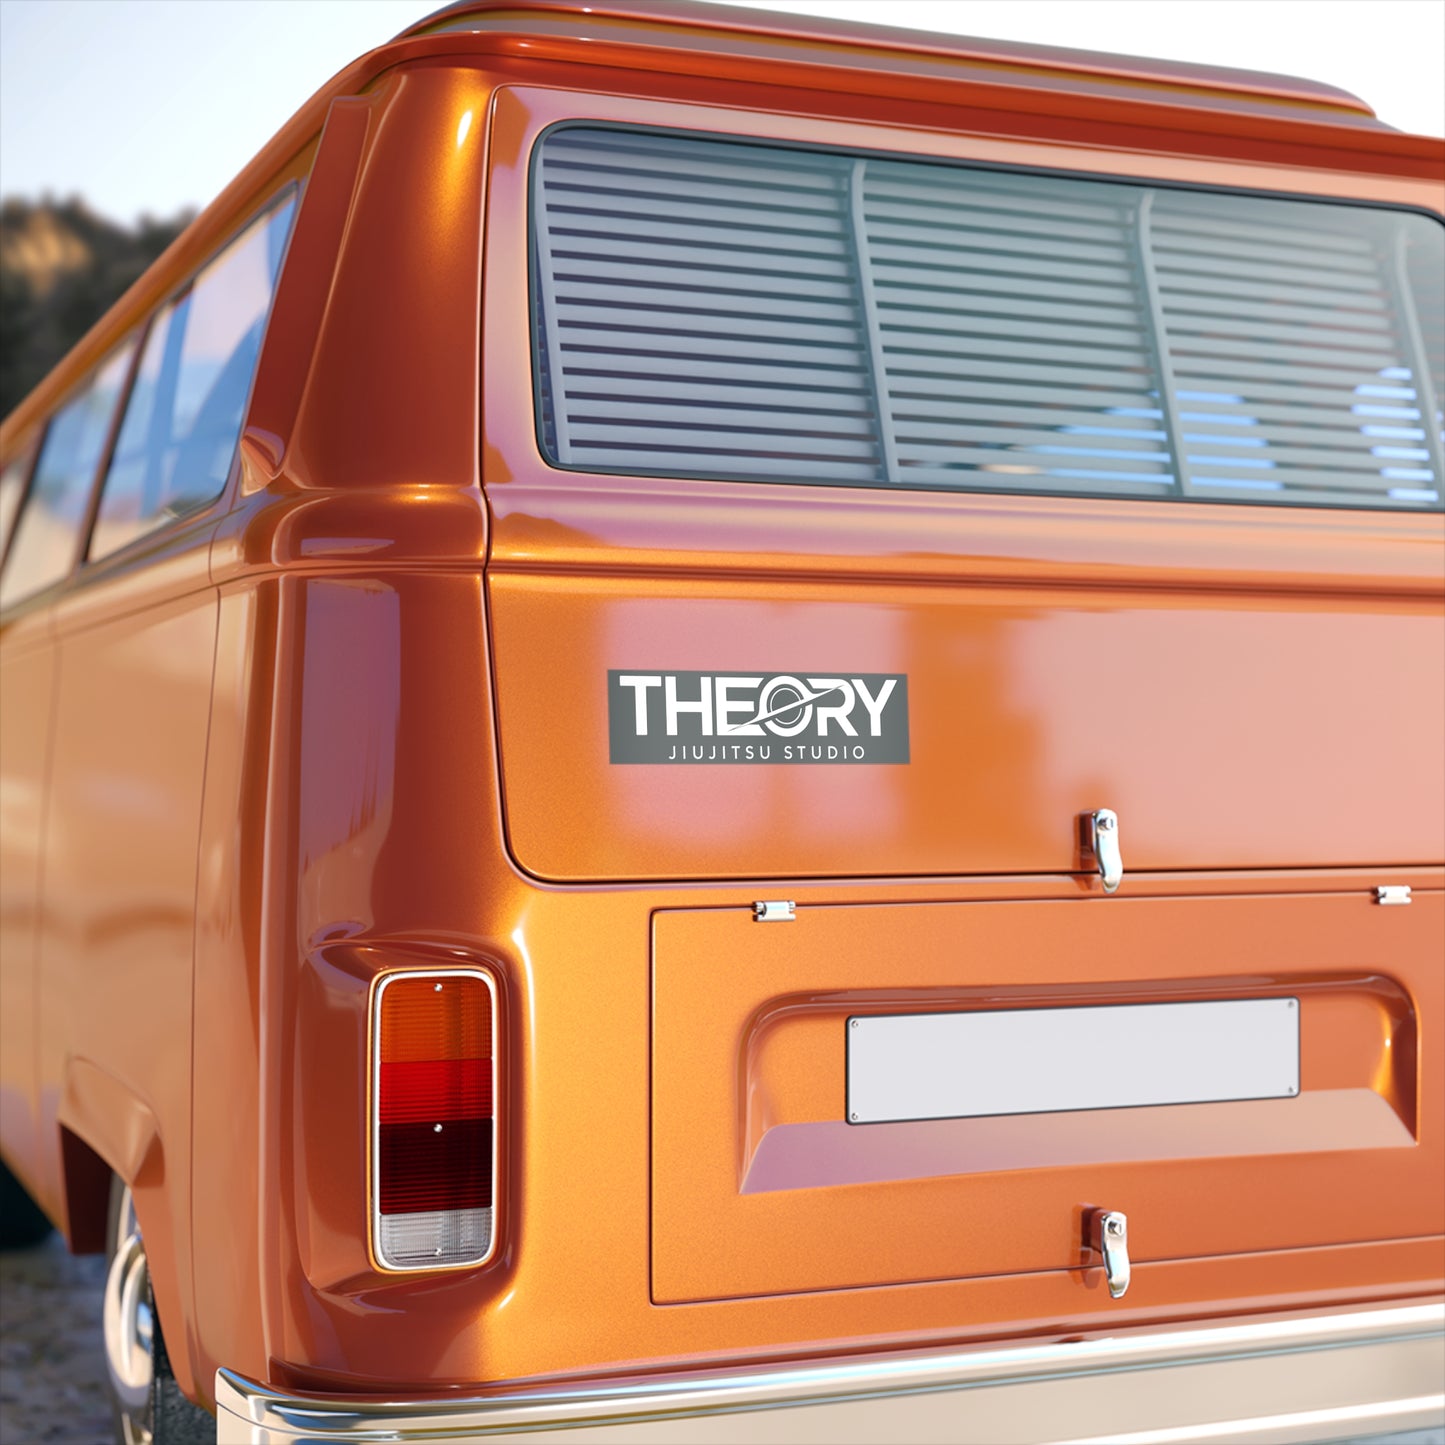 "Journey with THEØRY" Logo Bumper Sticker